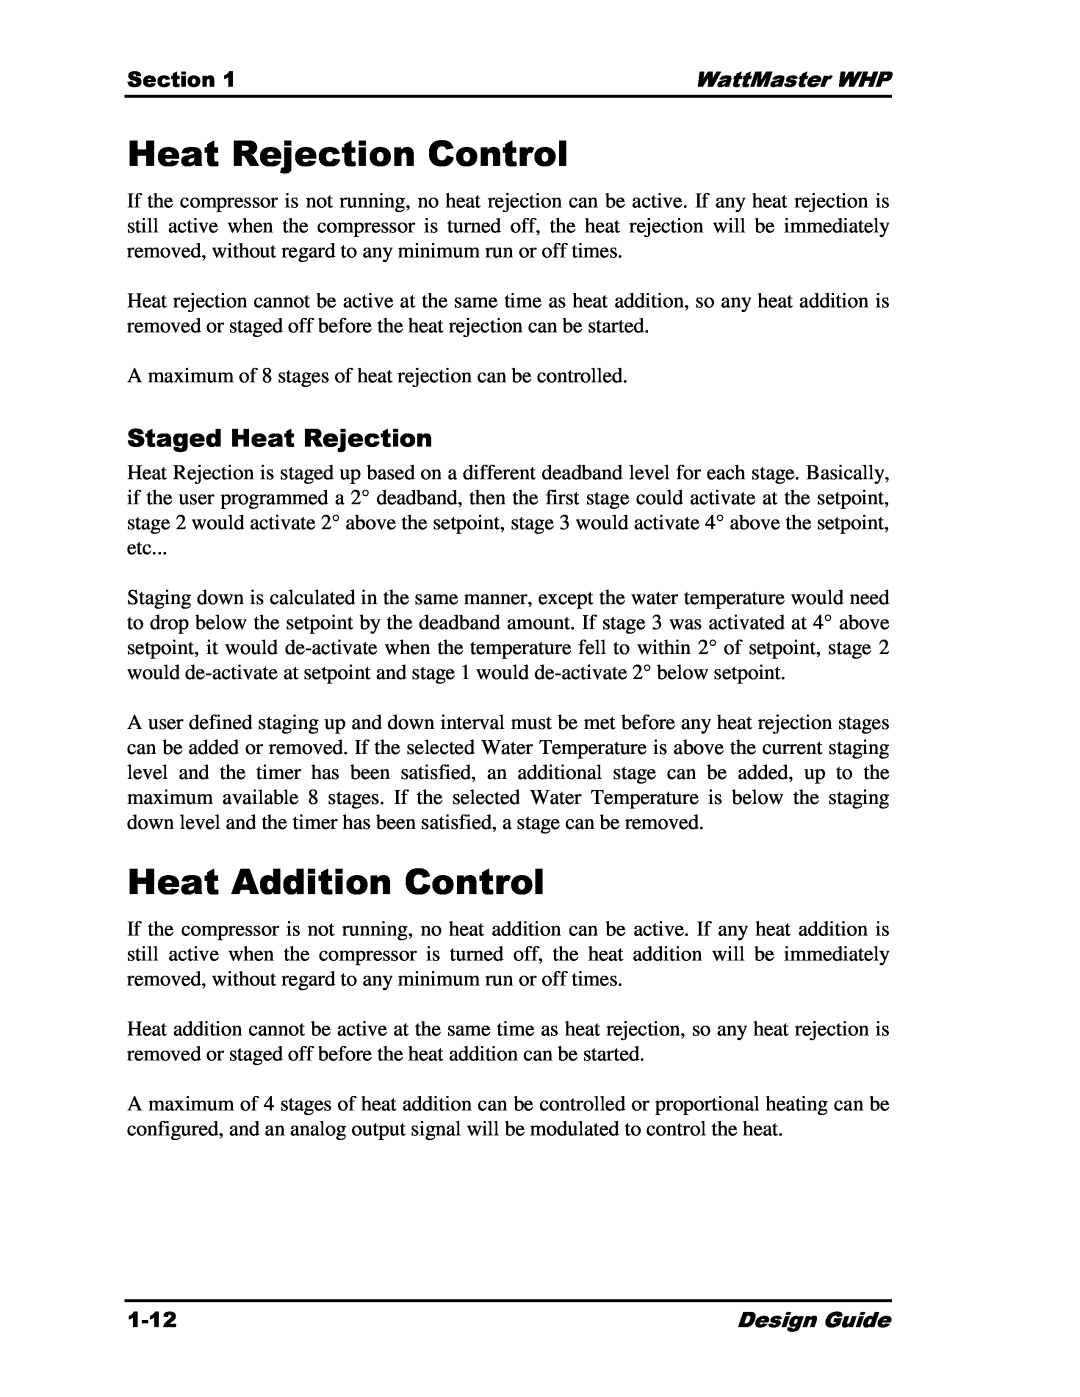 Heat Controller Water Source Heat Pump manual Heat Rejection Control, Heat Addition Control, Staged Heat Rejection 